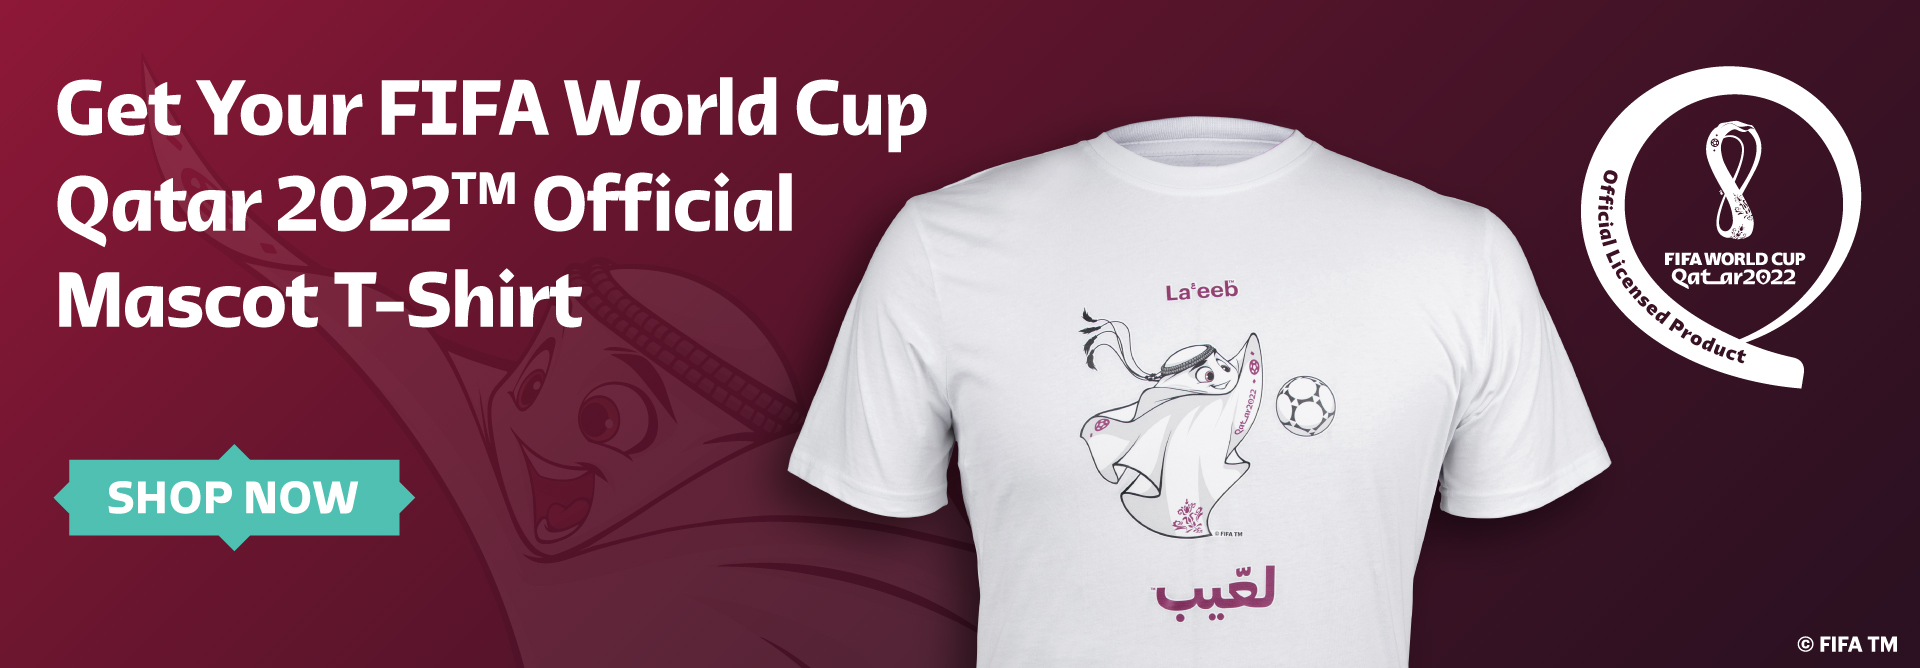 FIFA World Cup Qatar 2022